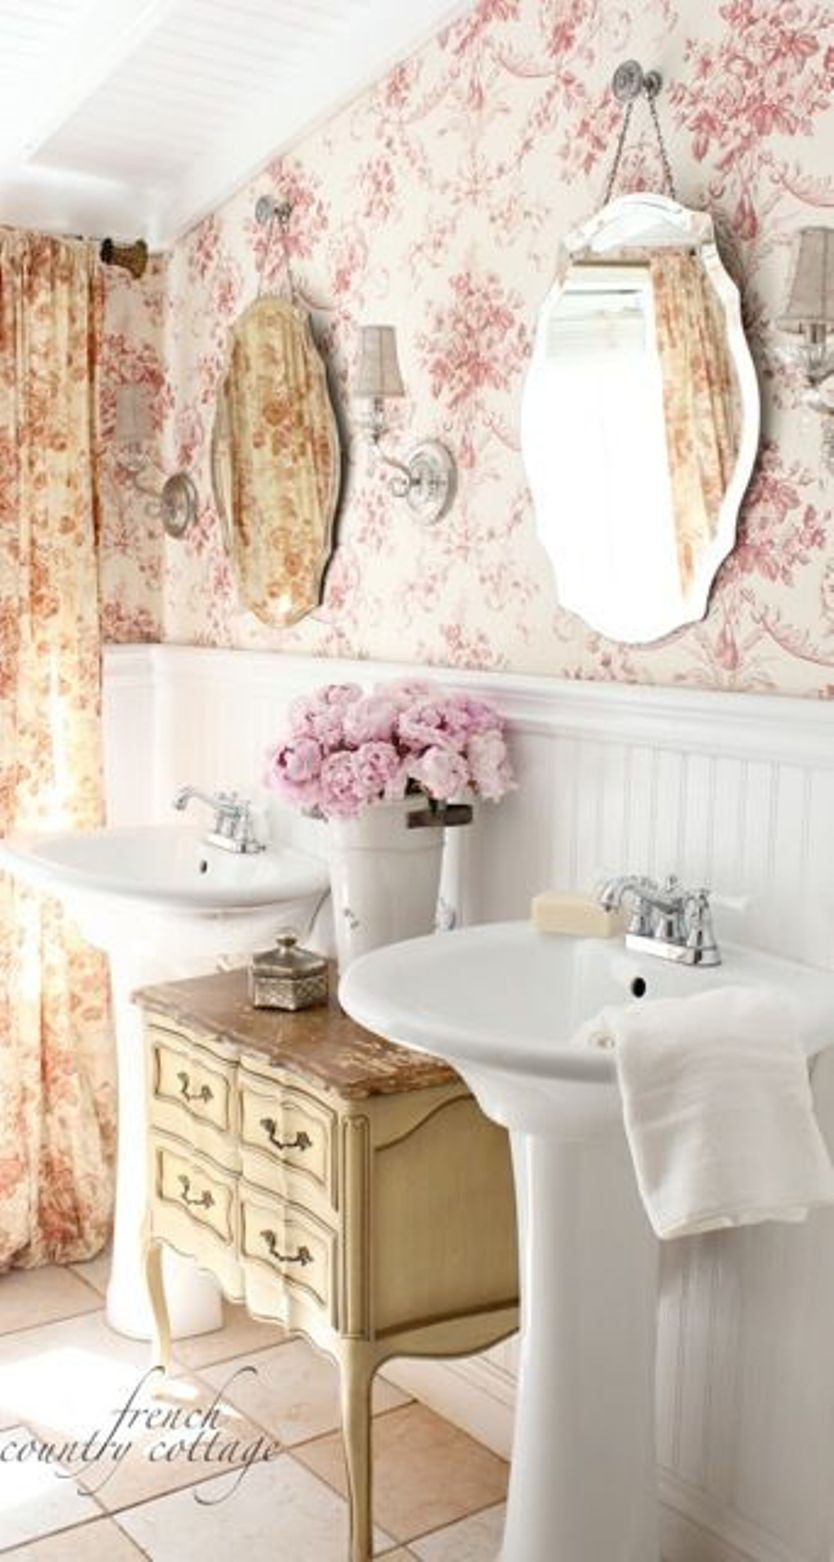 Small Vintage Bathroom Ideas
 Add Glamour With Small Vintage Bathroom Ideas